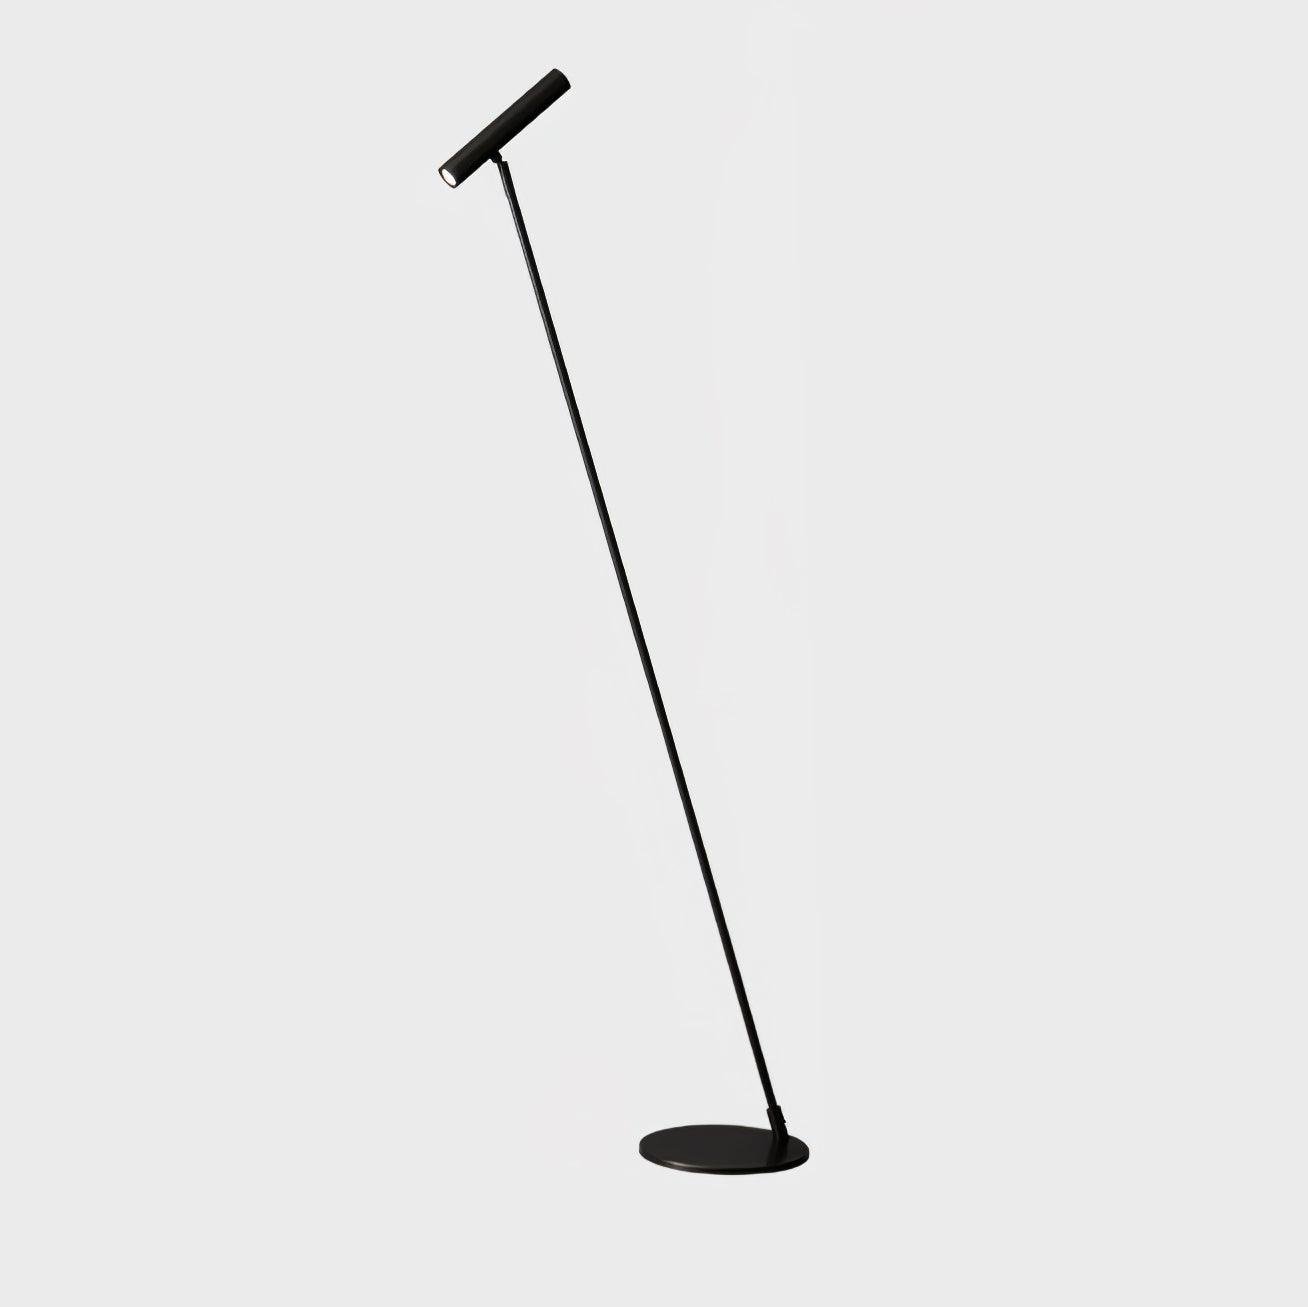 Black Tom LED Floor Lamp with EU Plug, measuring W 7.9″ x H 51.2″ (W 20cm x H 130cm)